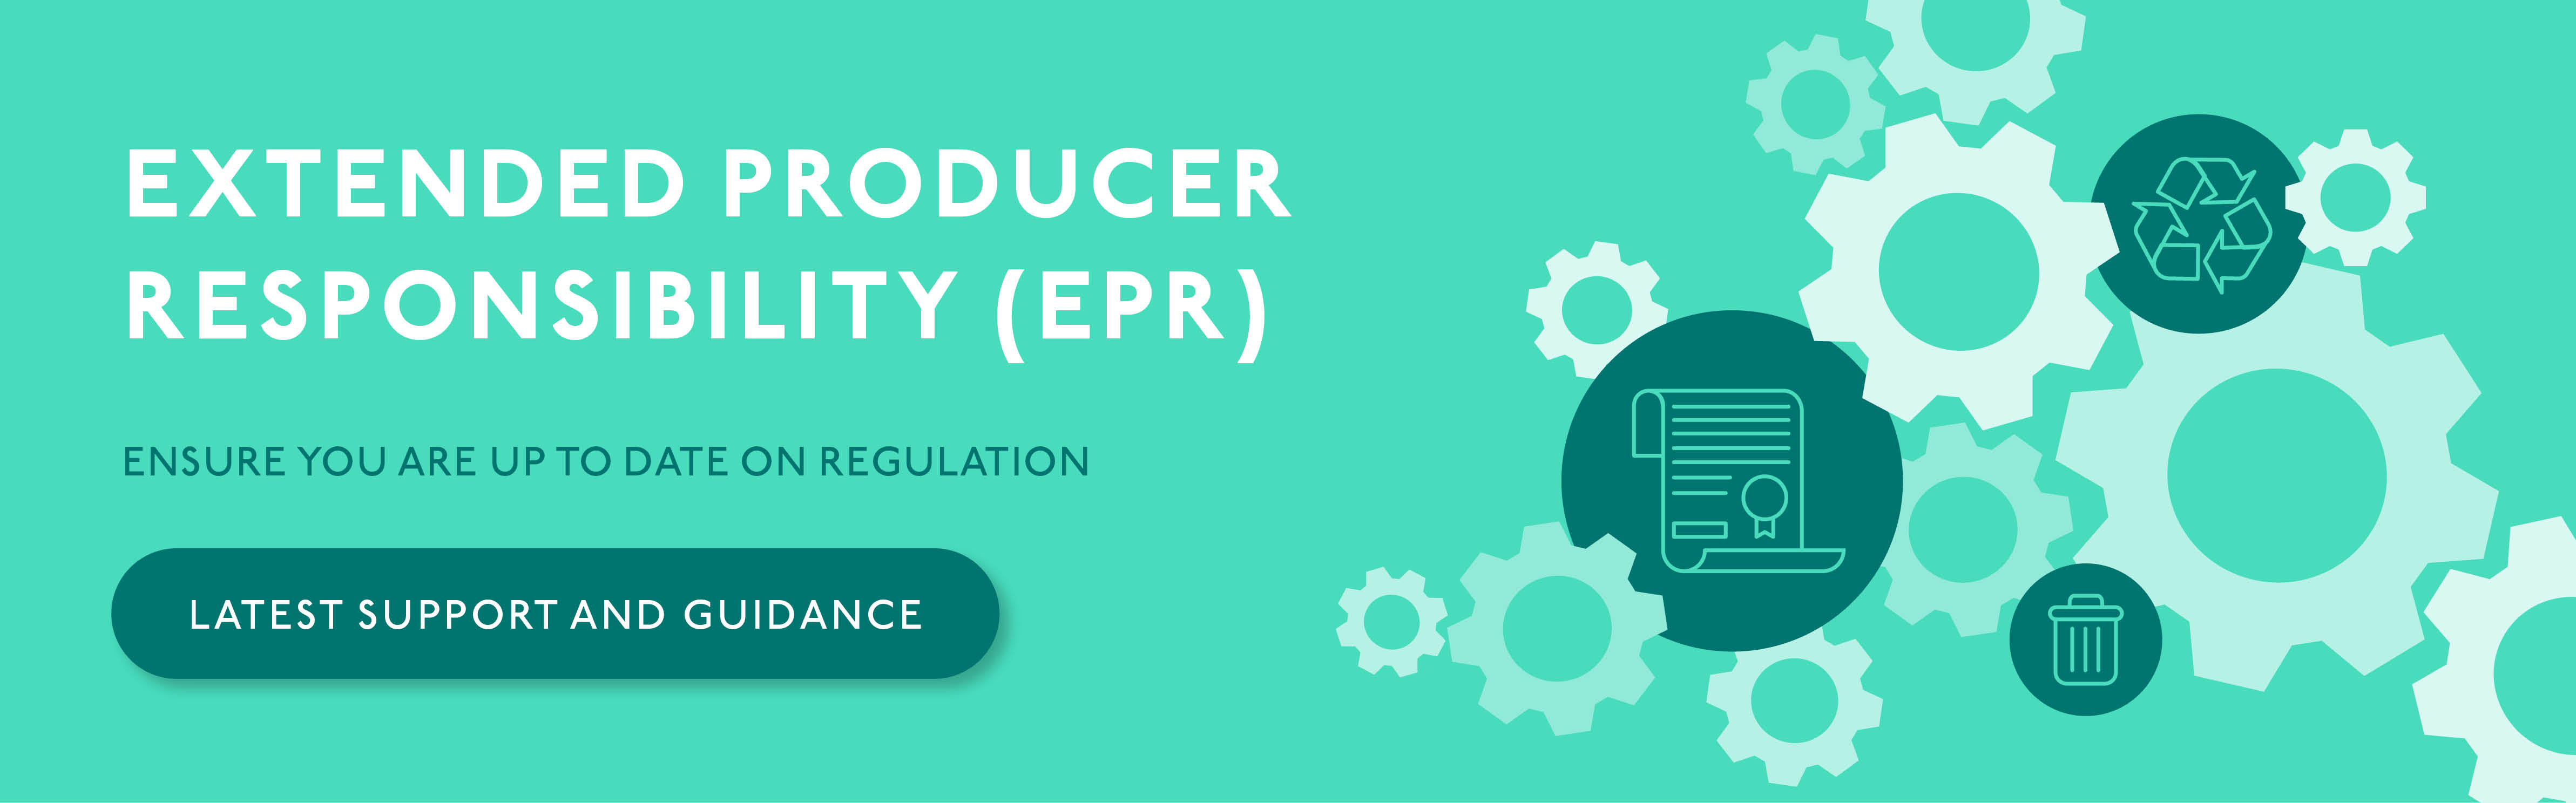 Extended Producer Responsibility (EPR)